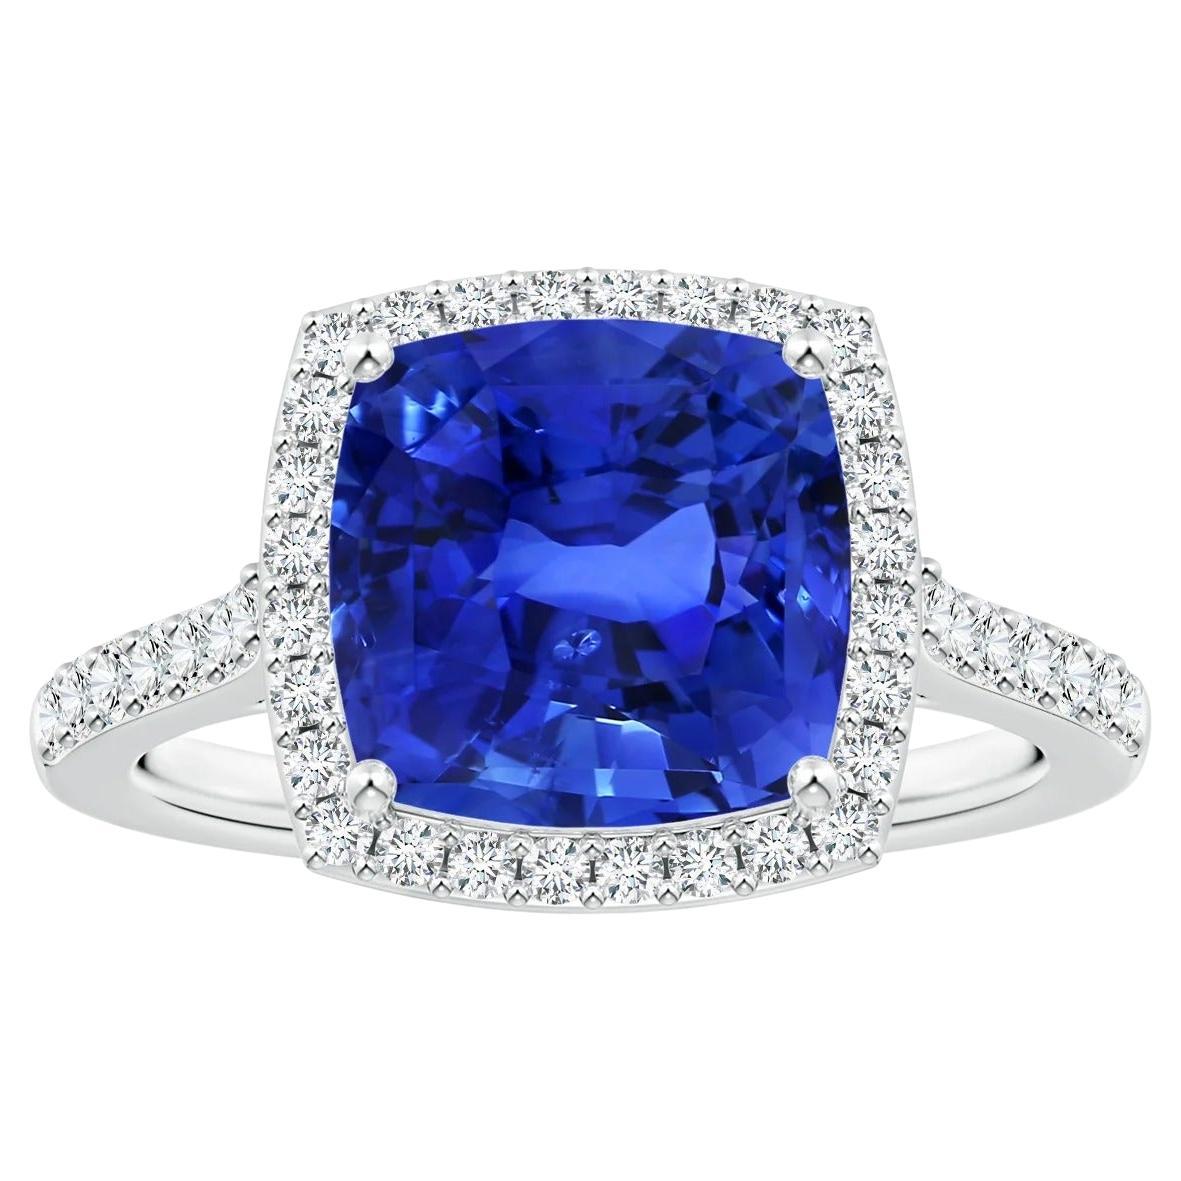 ANGARA Bague en platine avec halo de saphirs bleus naturels certifiés GIA et diamants